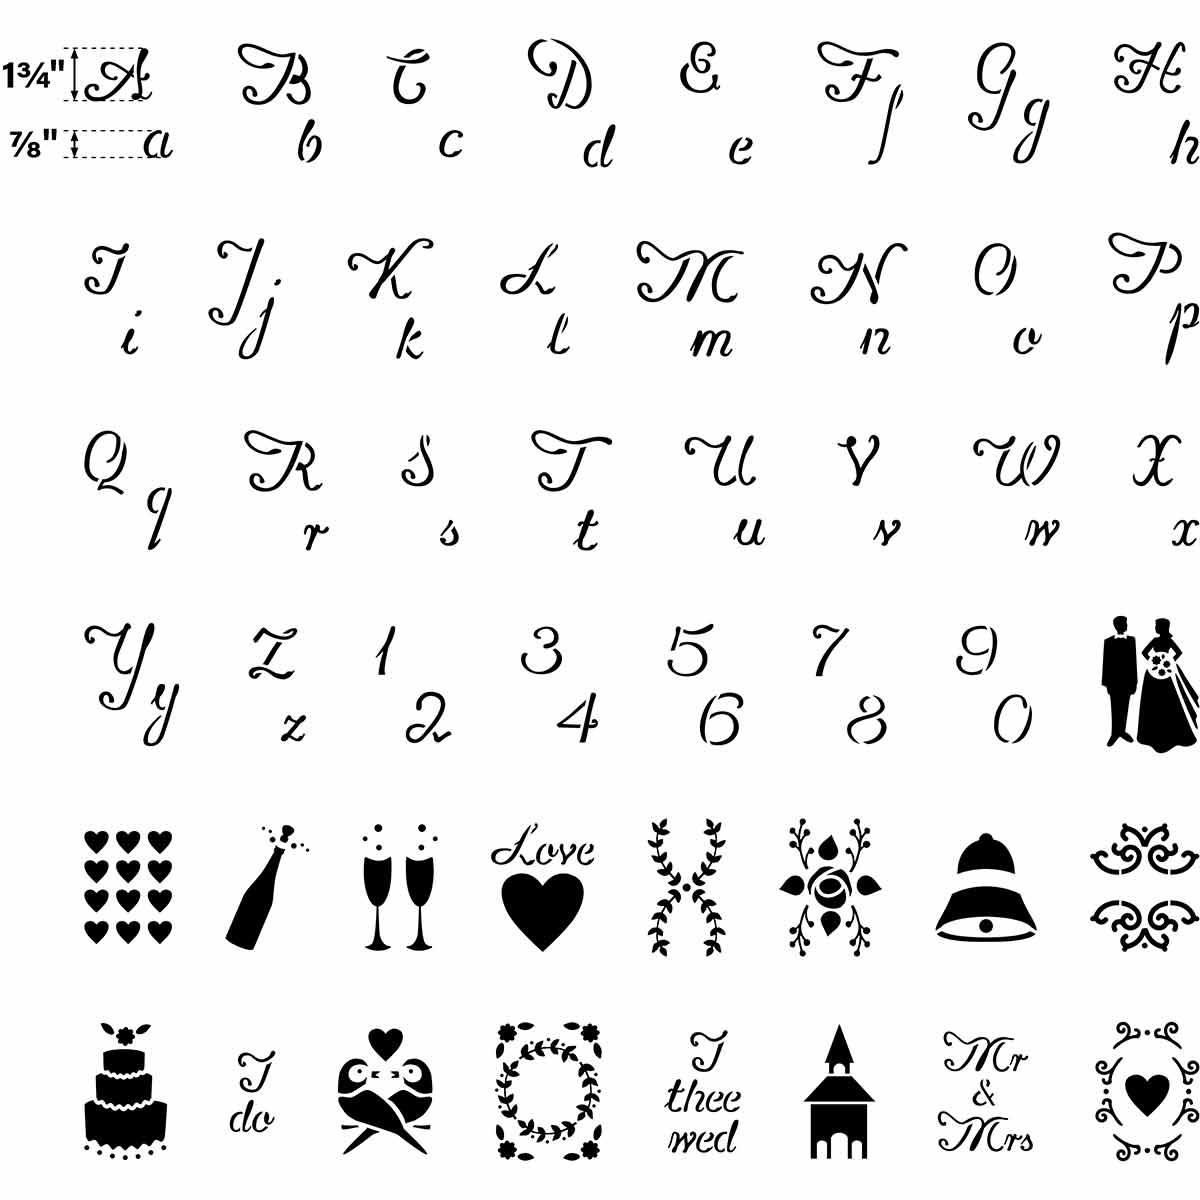 FolkArt ® Paper Stencil Value Packs - Wedding Alphabet and Icons - 71963E